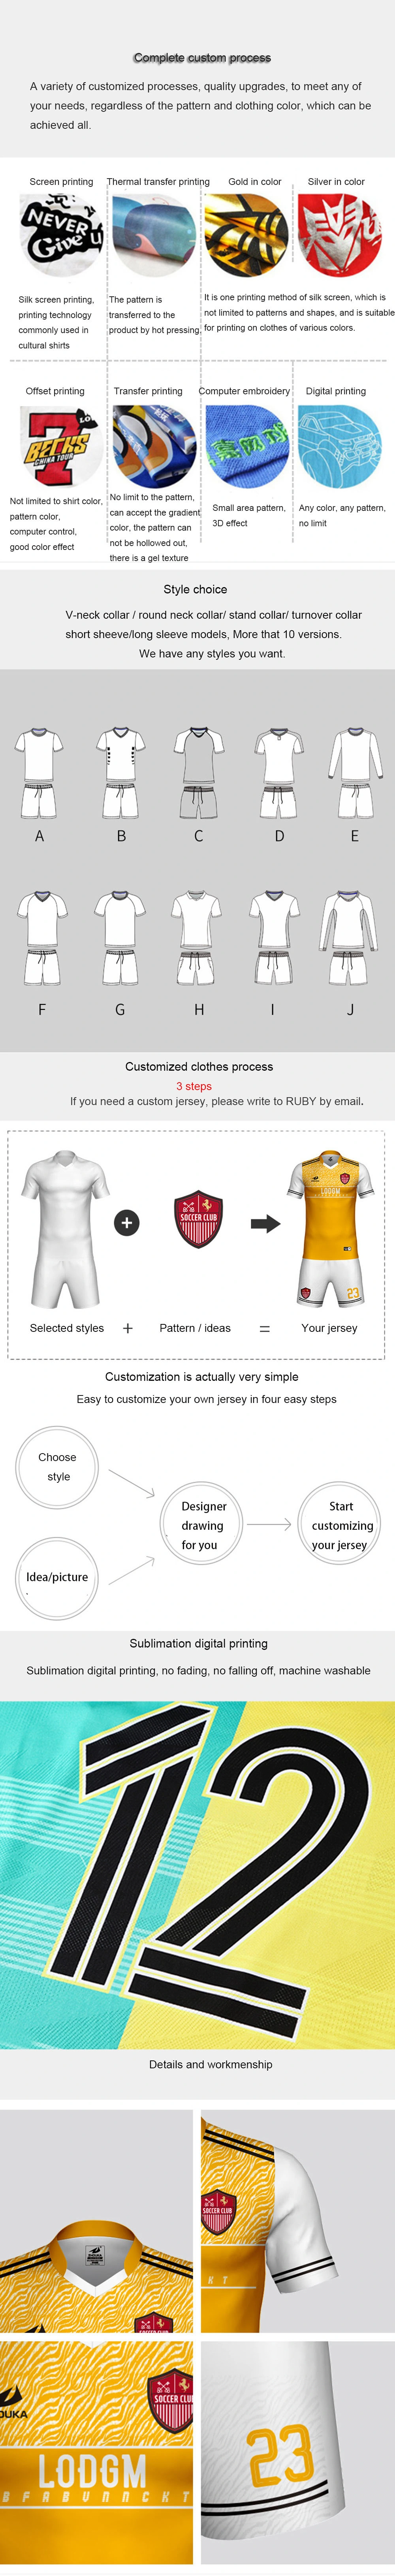 Custom Cheap Soccer Jersey Printing Machine Design Soccer Jerseys